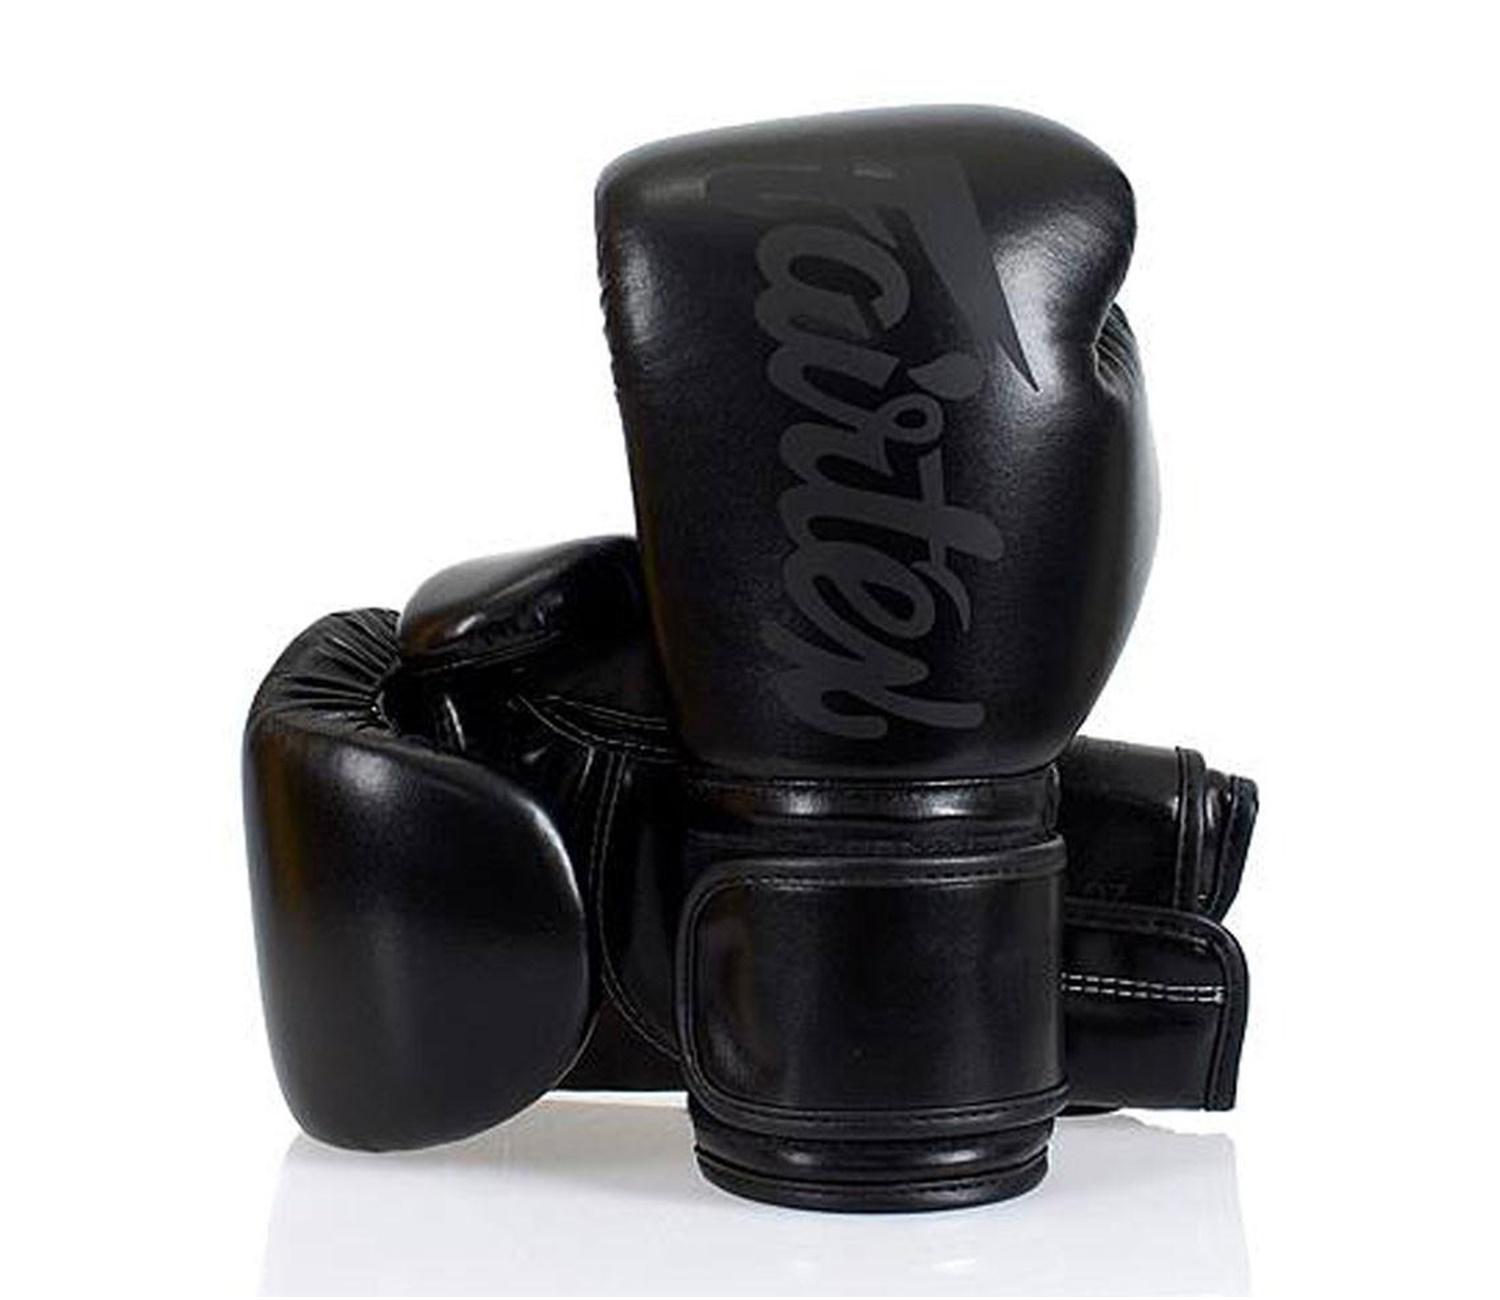 Fairtex Boxing Gloves BGV14ฺฺSB Supper Black 8,10,12,14,16 oz  Sparring MMA K1 นวมซ้อมชก แฟร์แท็ค สีดำล้วน